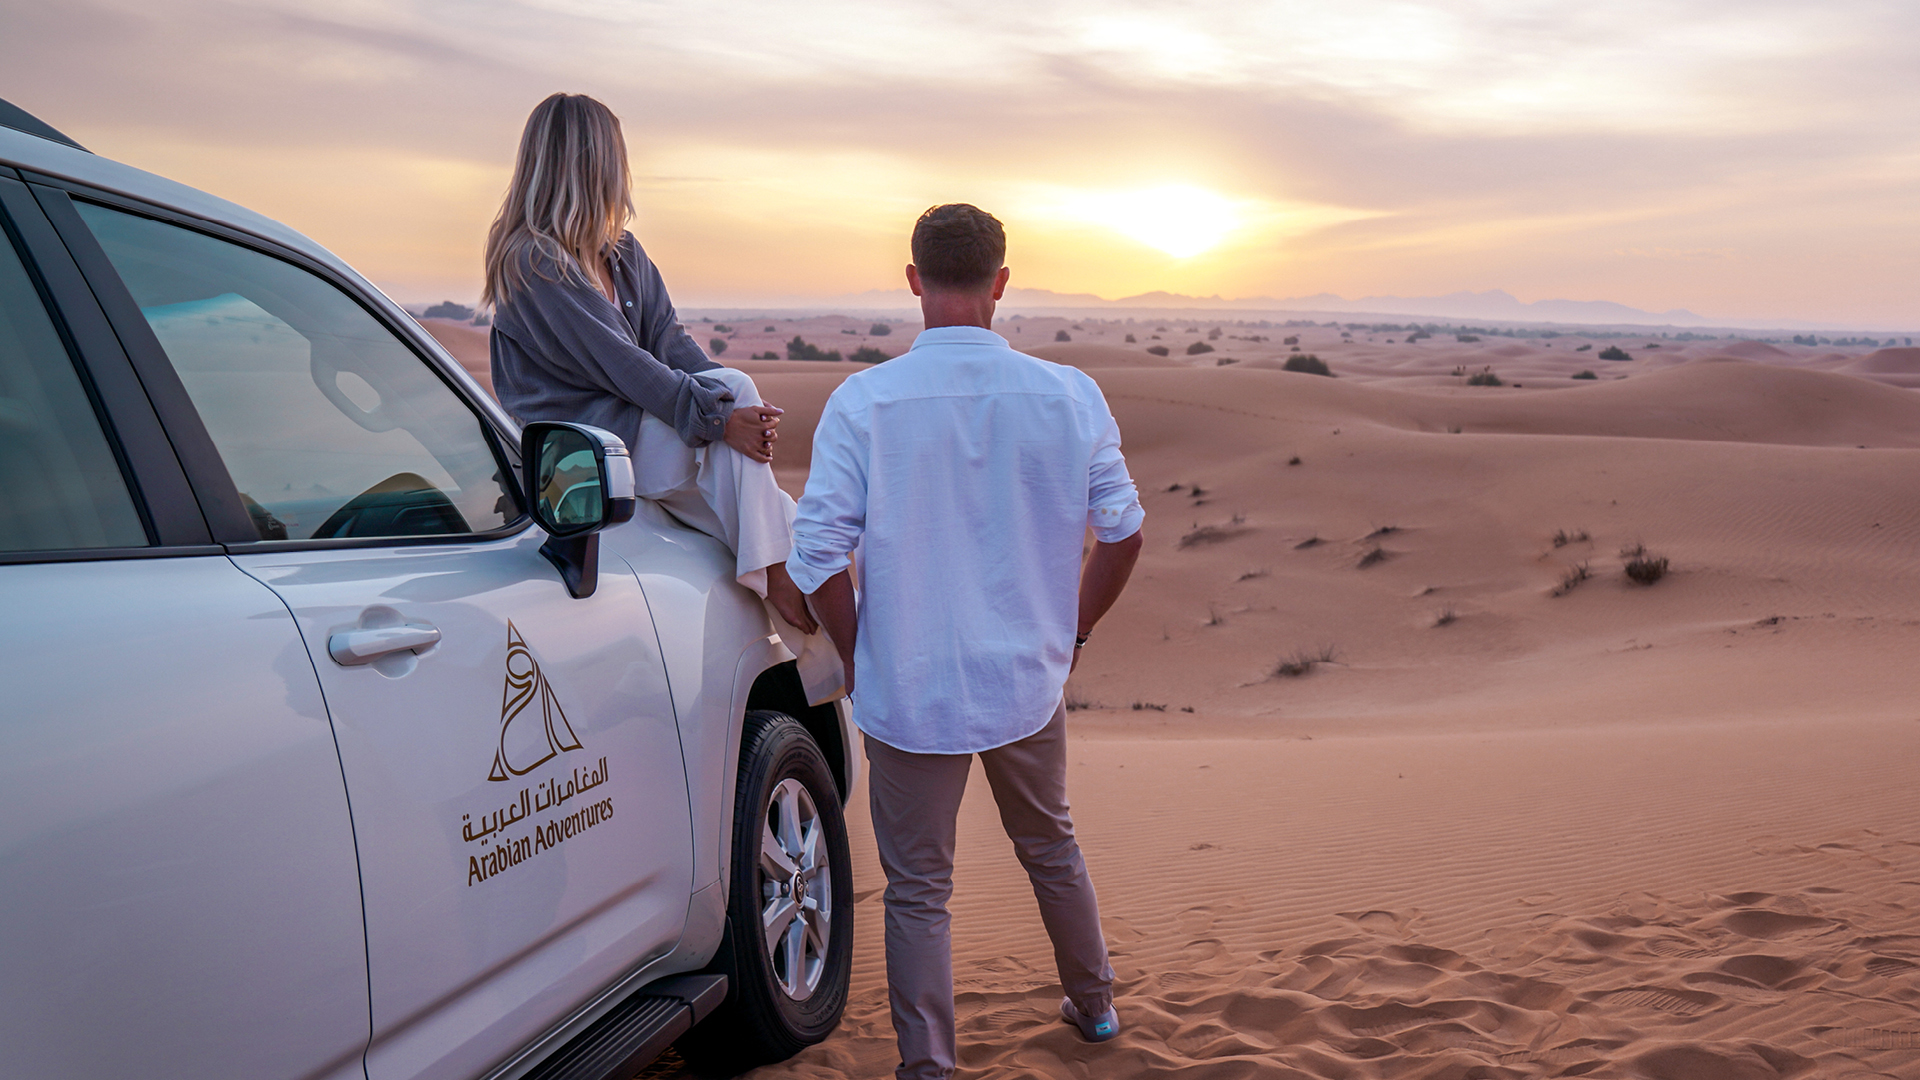 Morning Desert Adventure in Dubai | Arabian Adventures